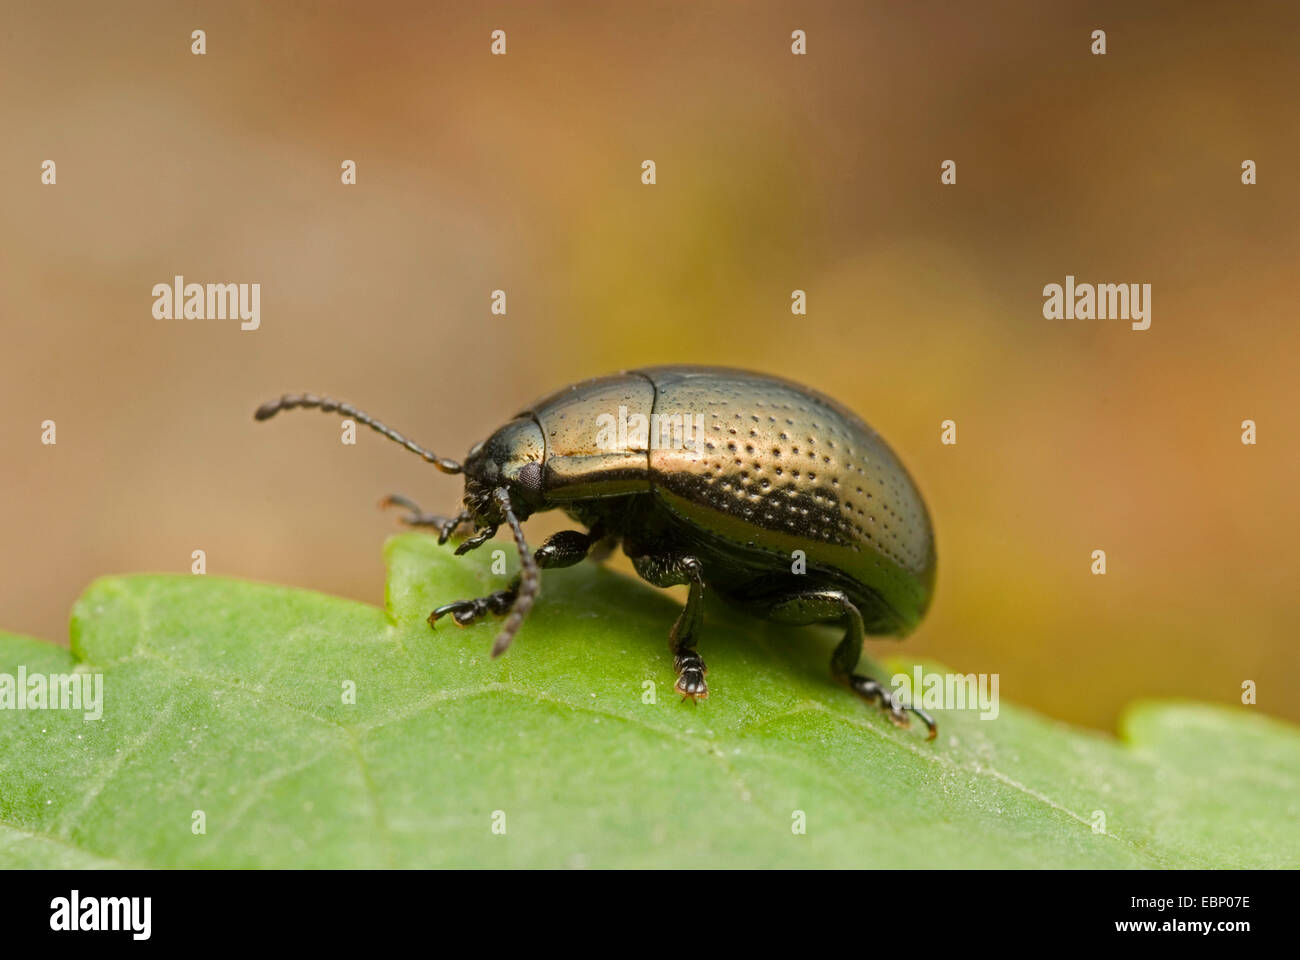 Leaf Beetle (Chrysolina oricalcia), on a leaf, Germany Stock Photo